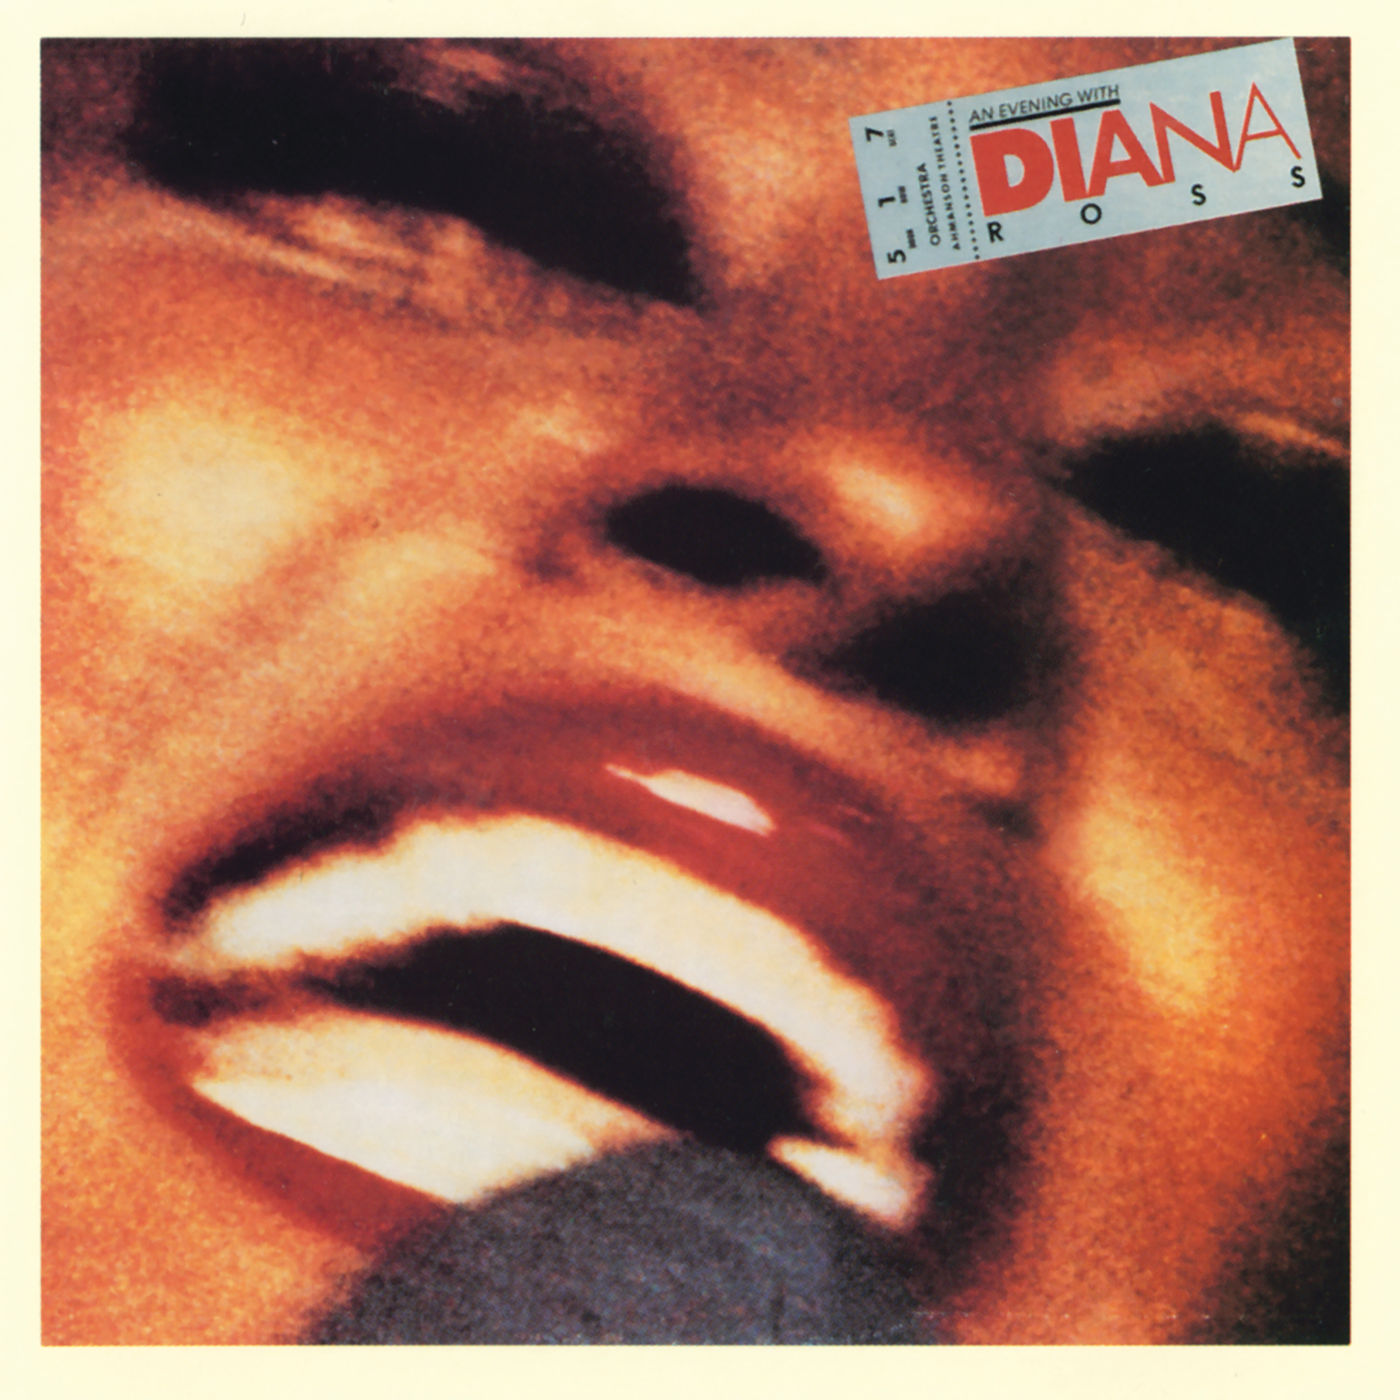 Diana Ross - 1977 - An Evening With Diana Ross [2021 Motown Records] 24-192